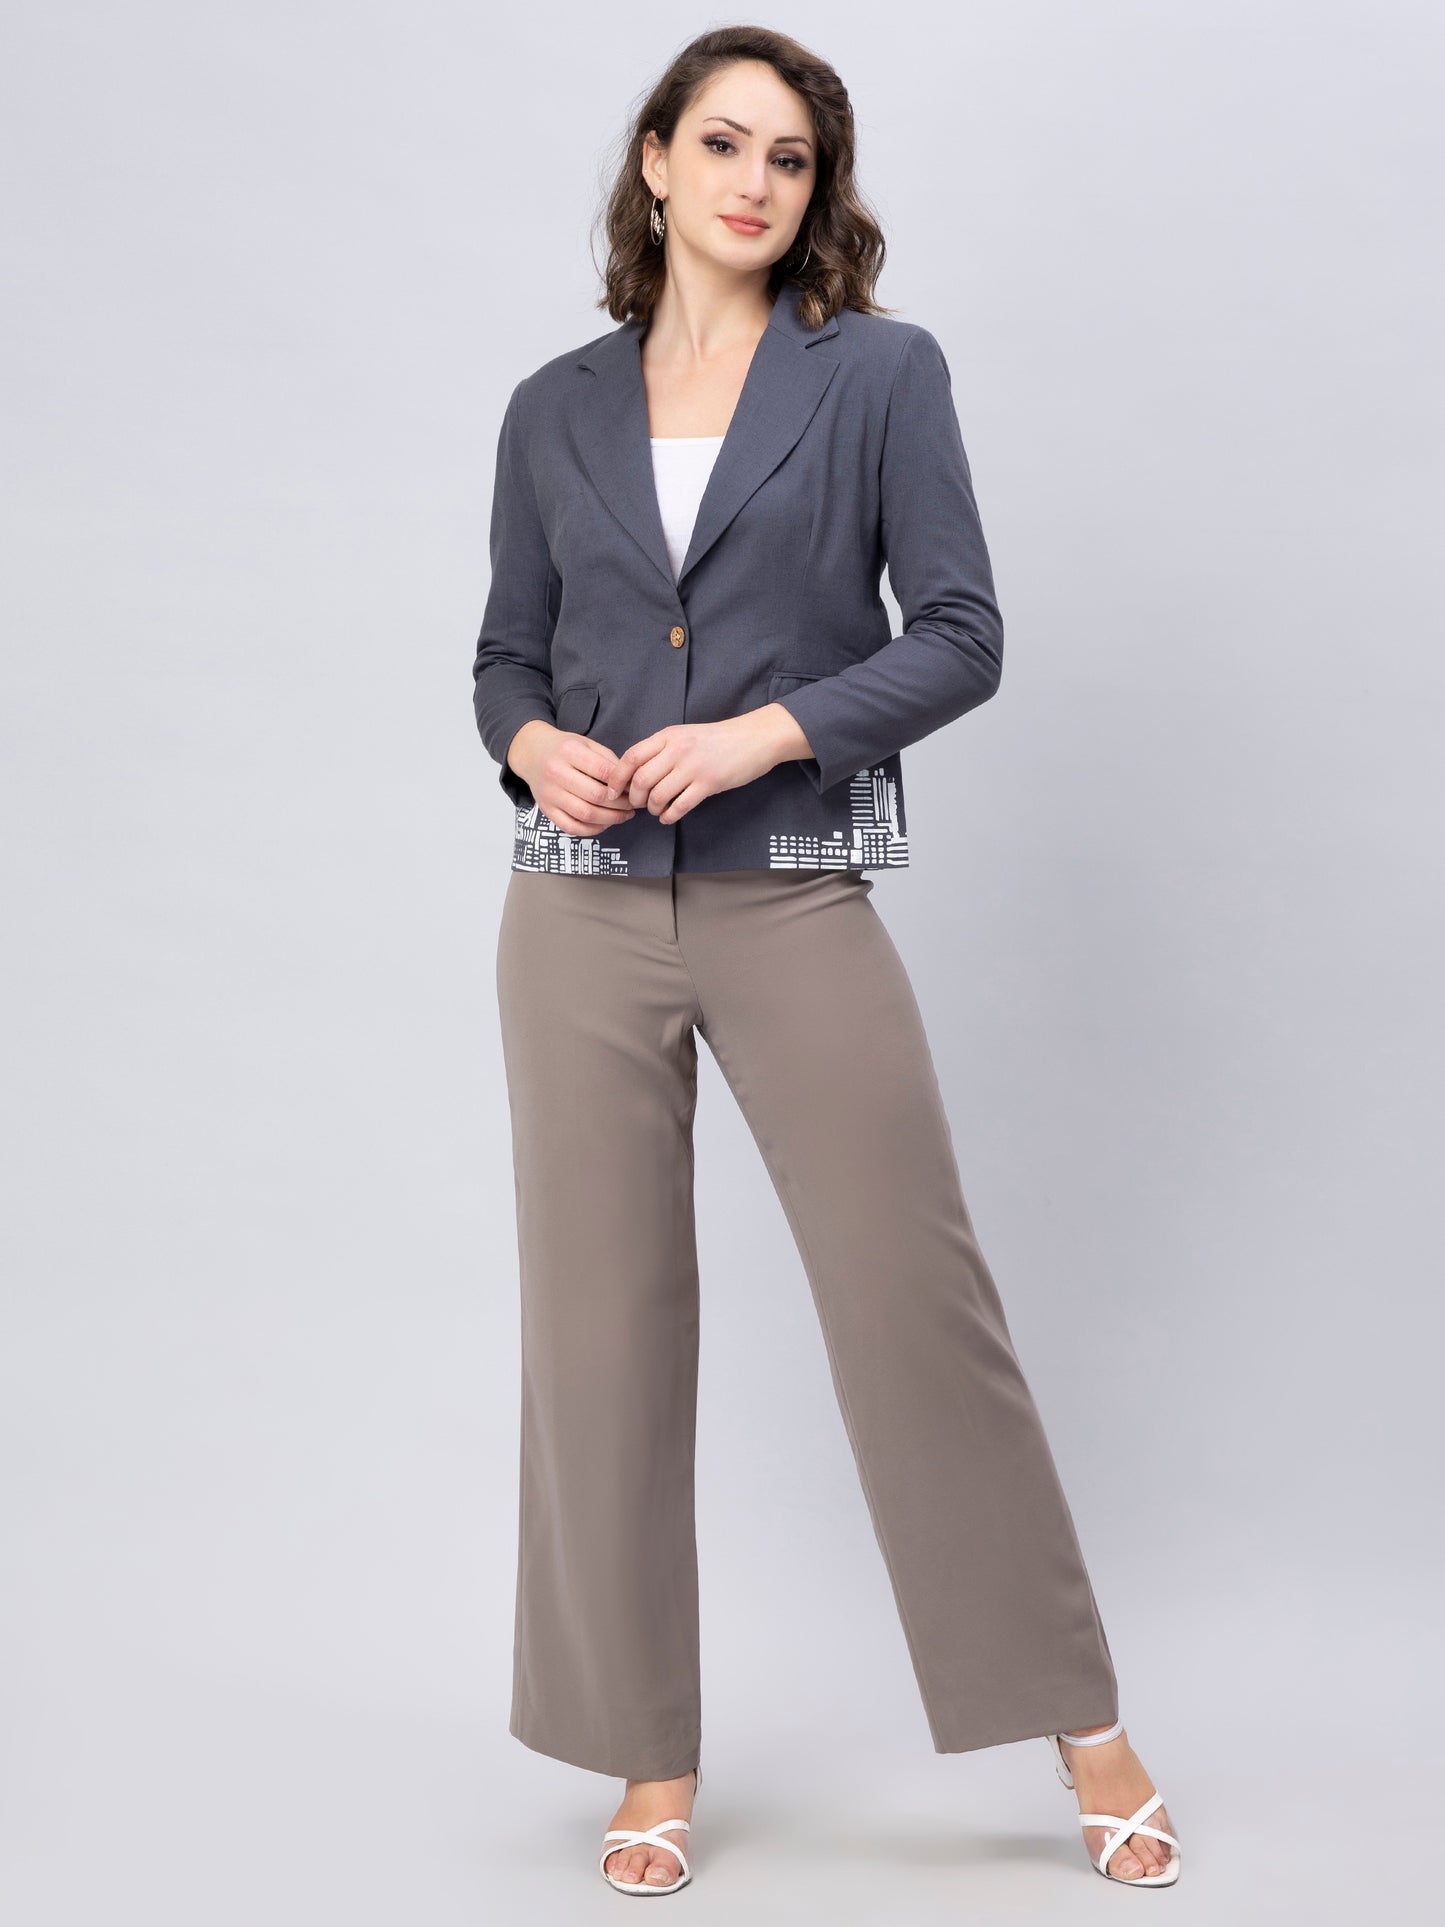 A full length view of lady in Stylish Grey Blazer with Modern Motif, womens workwear